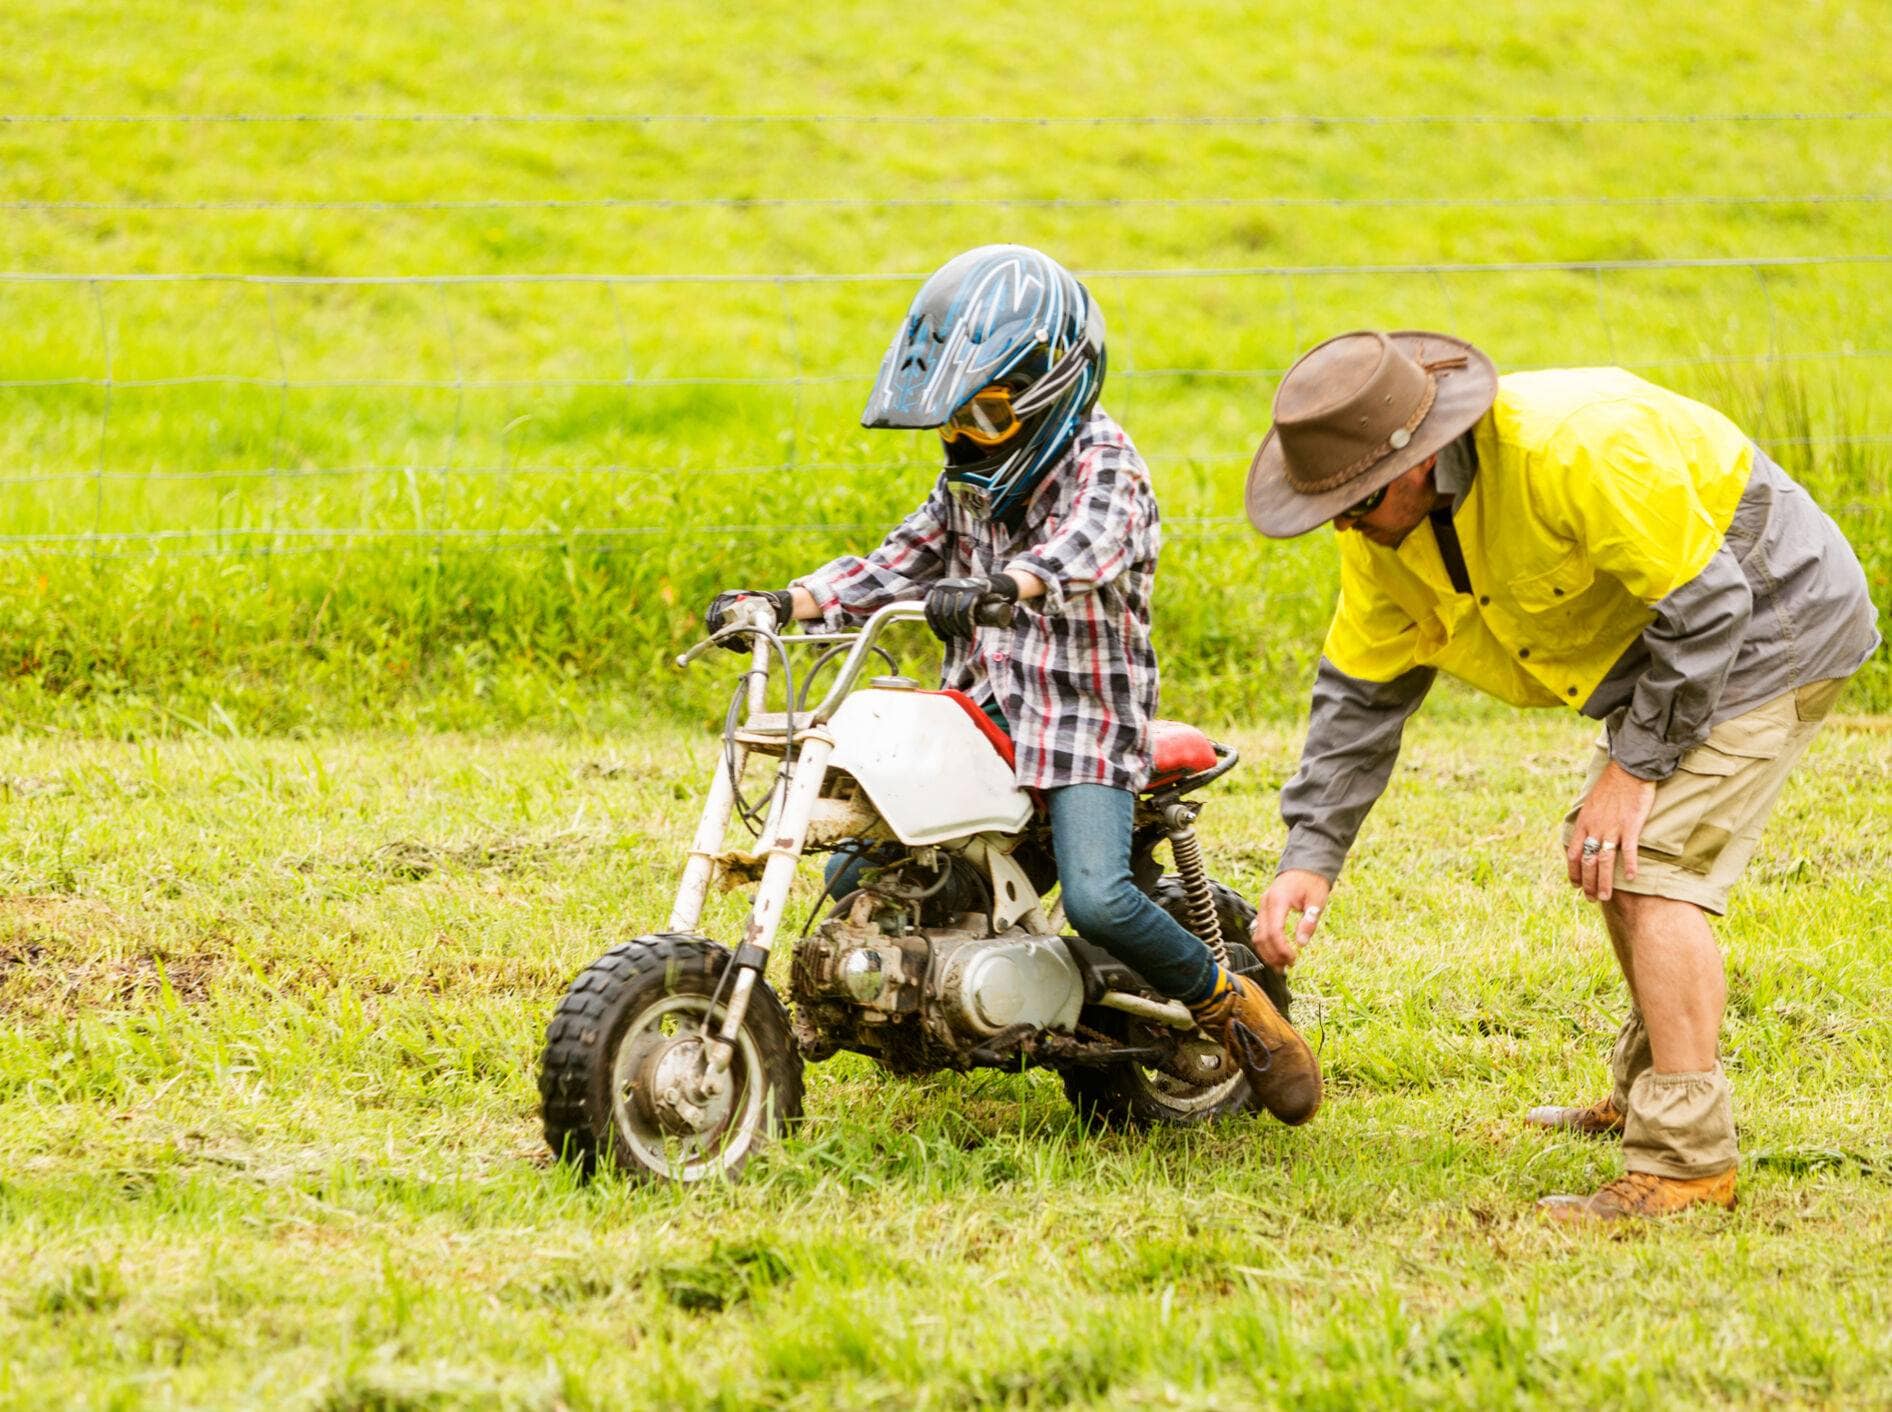 Tolle Kindermotorräder: Tipps, Infos, beste Modelle